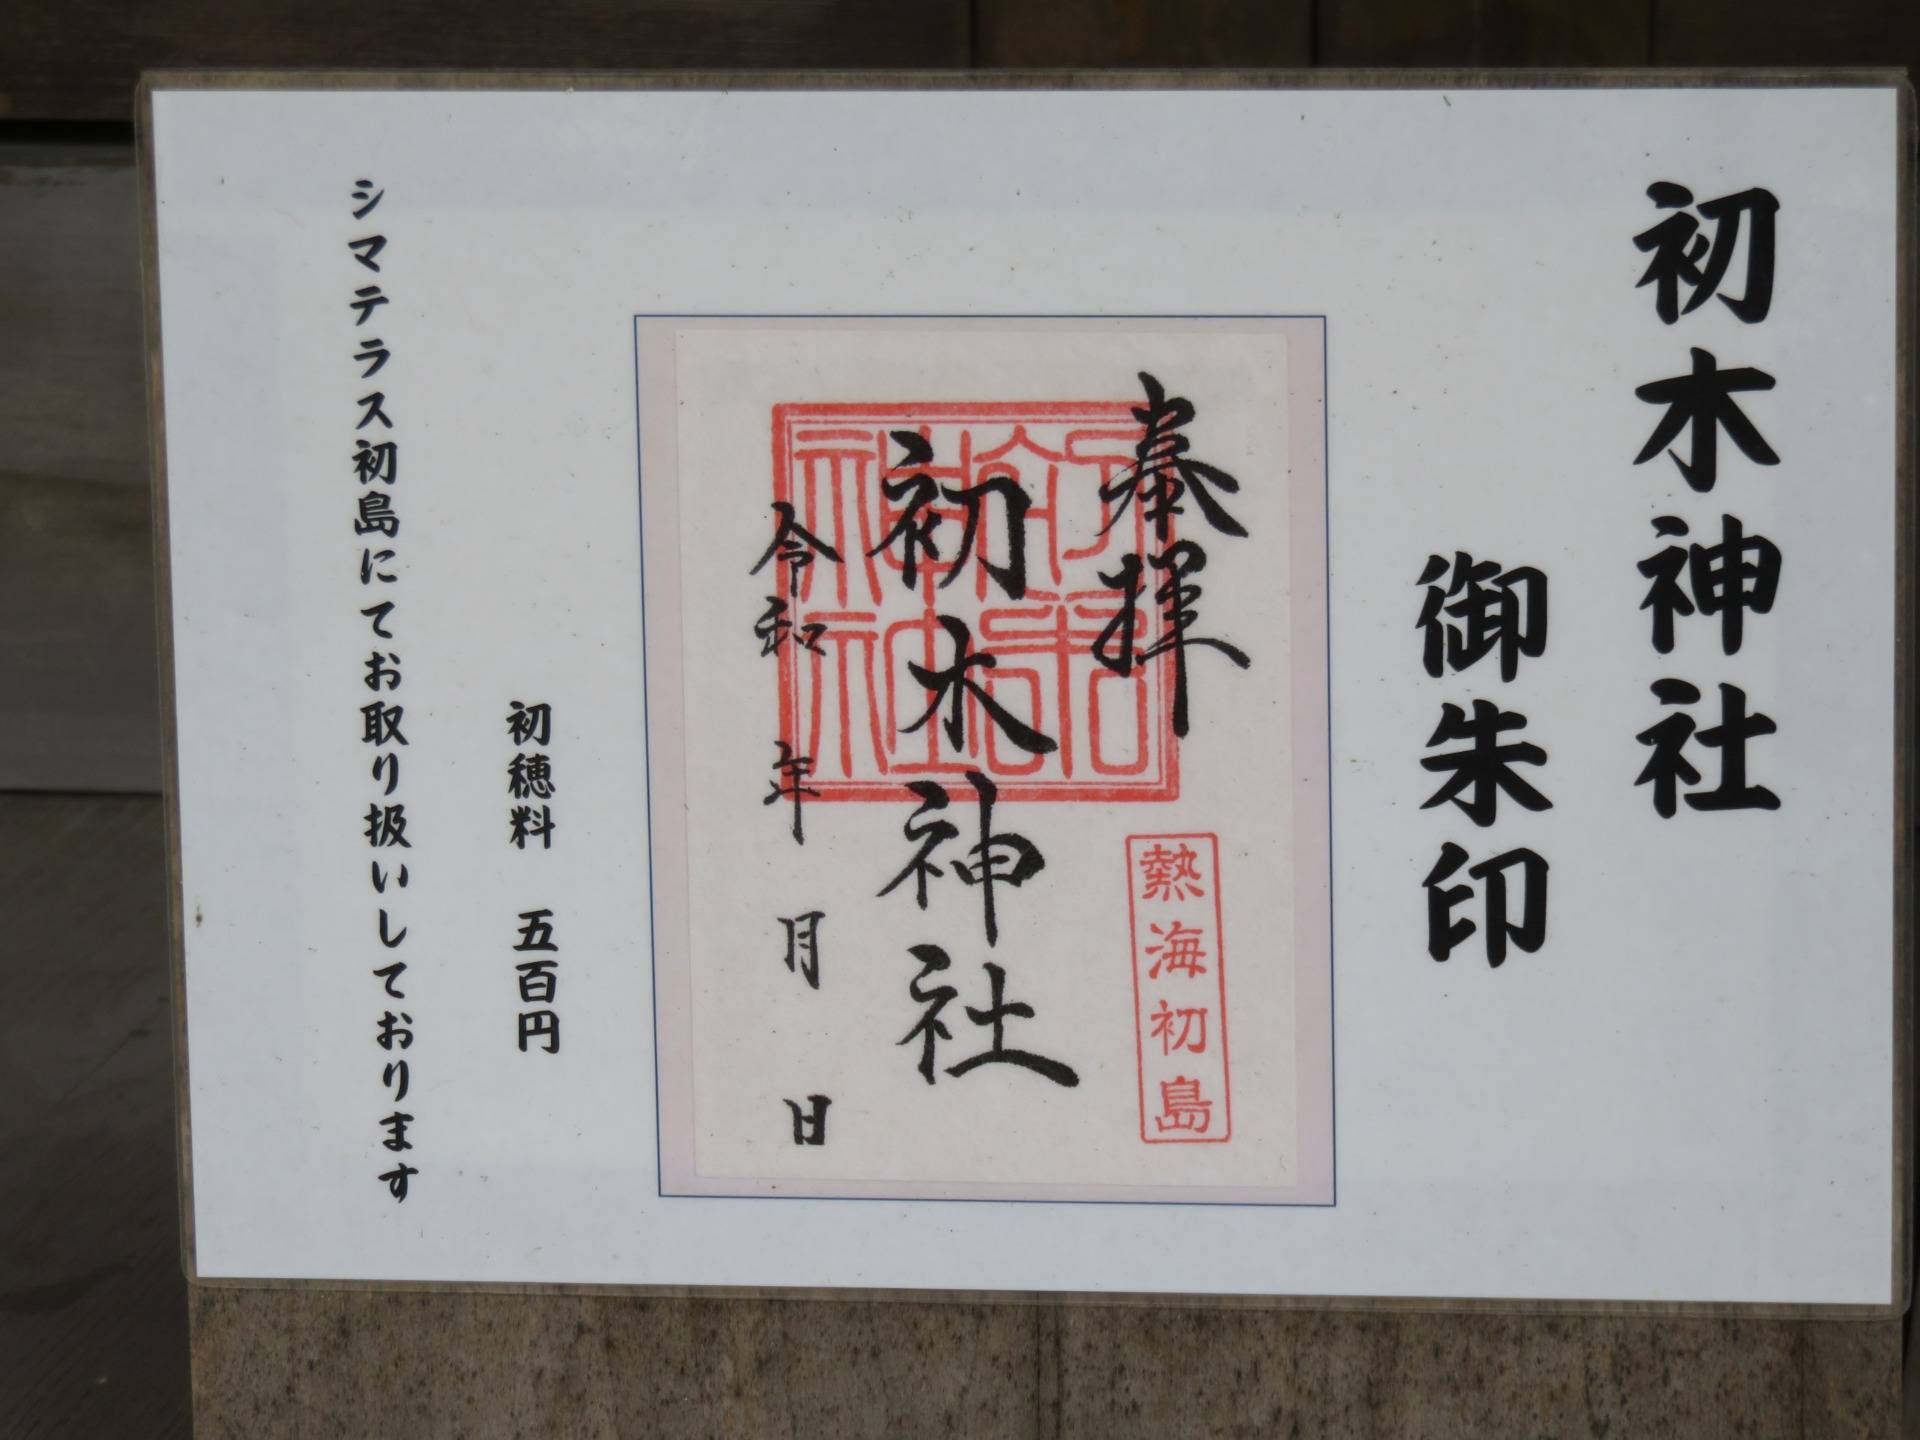 Shrine stamp information